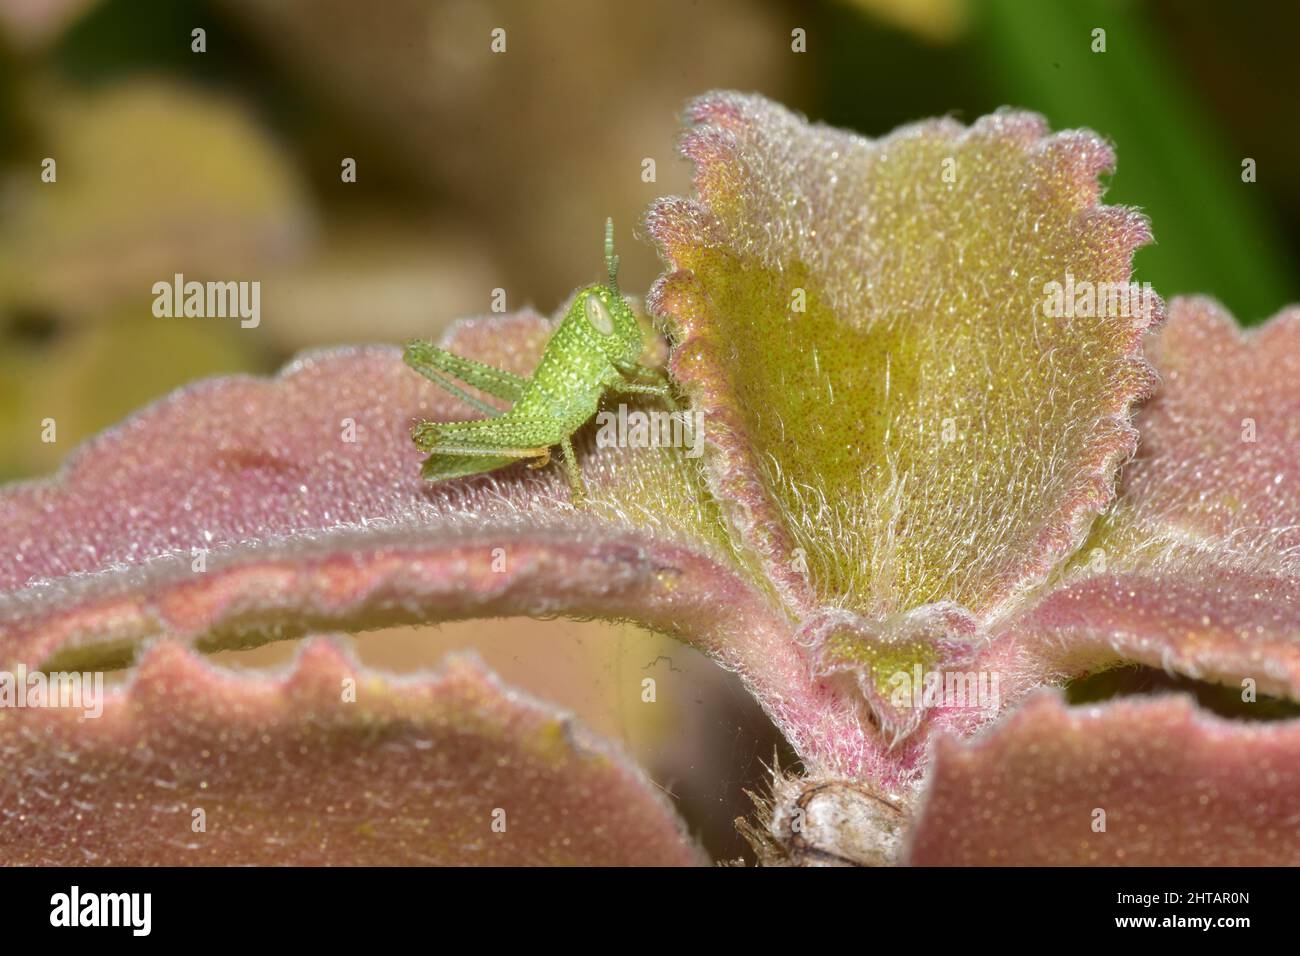 Green grasshopper on a spanish thyme leaf Stock Photo